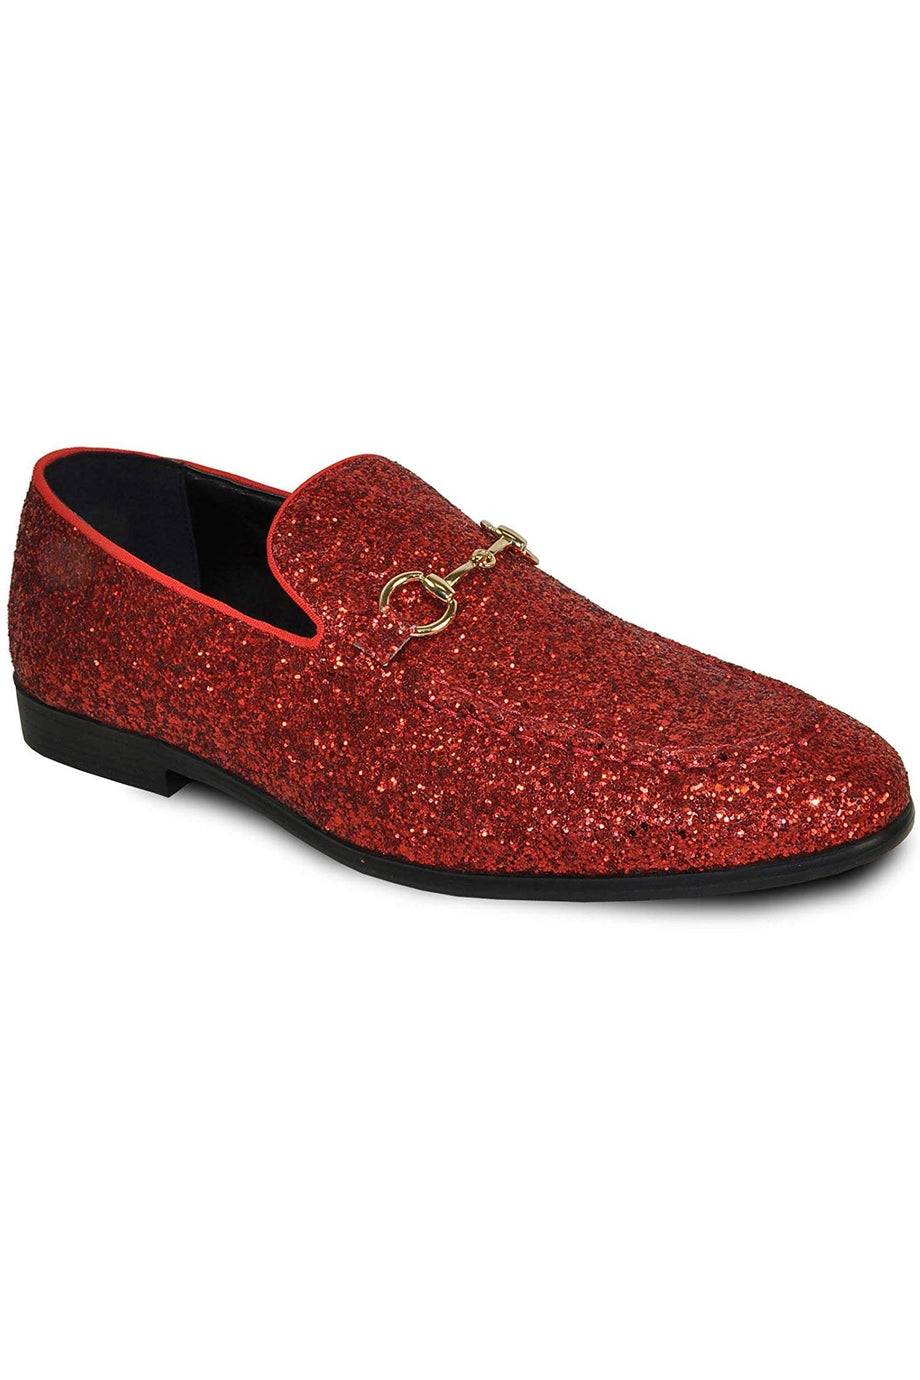 Bravo "Glitter" Red Shoes